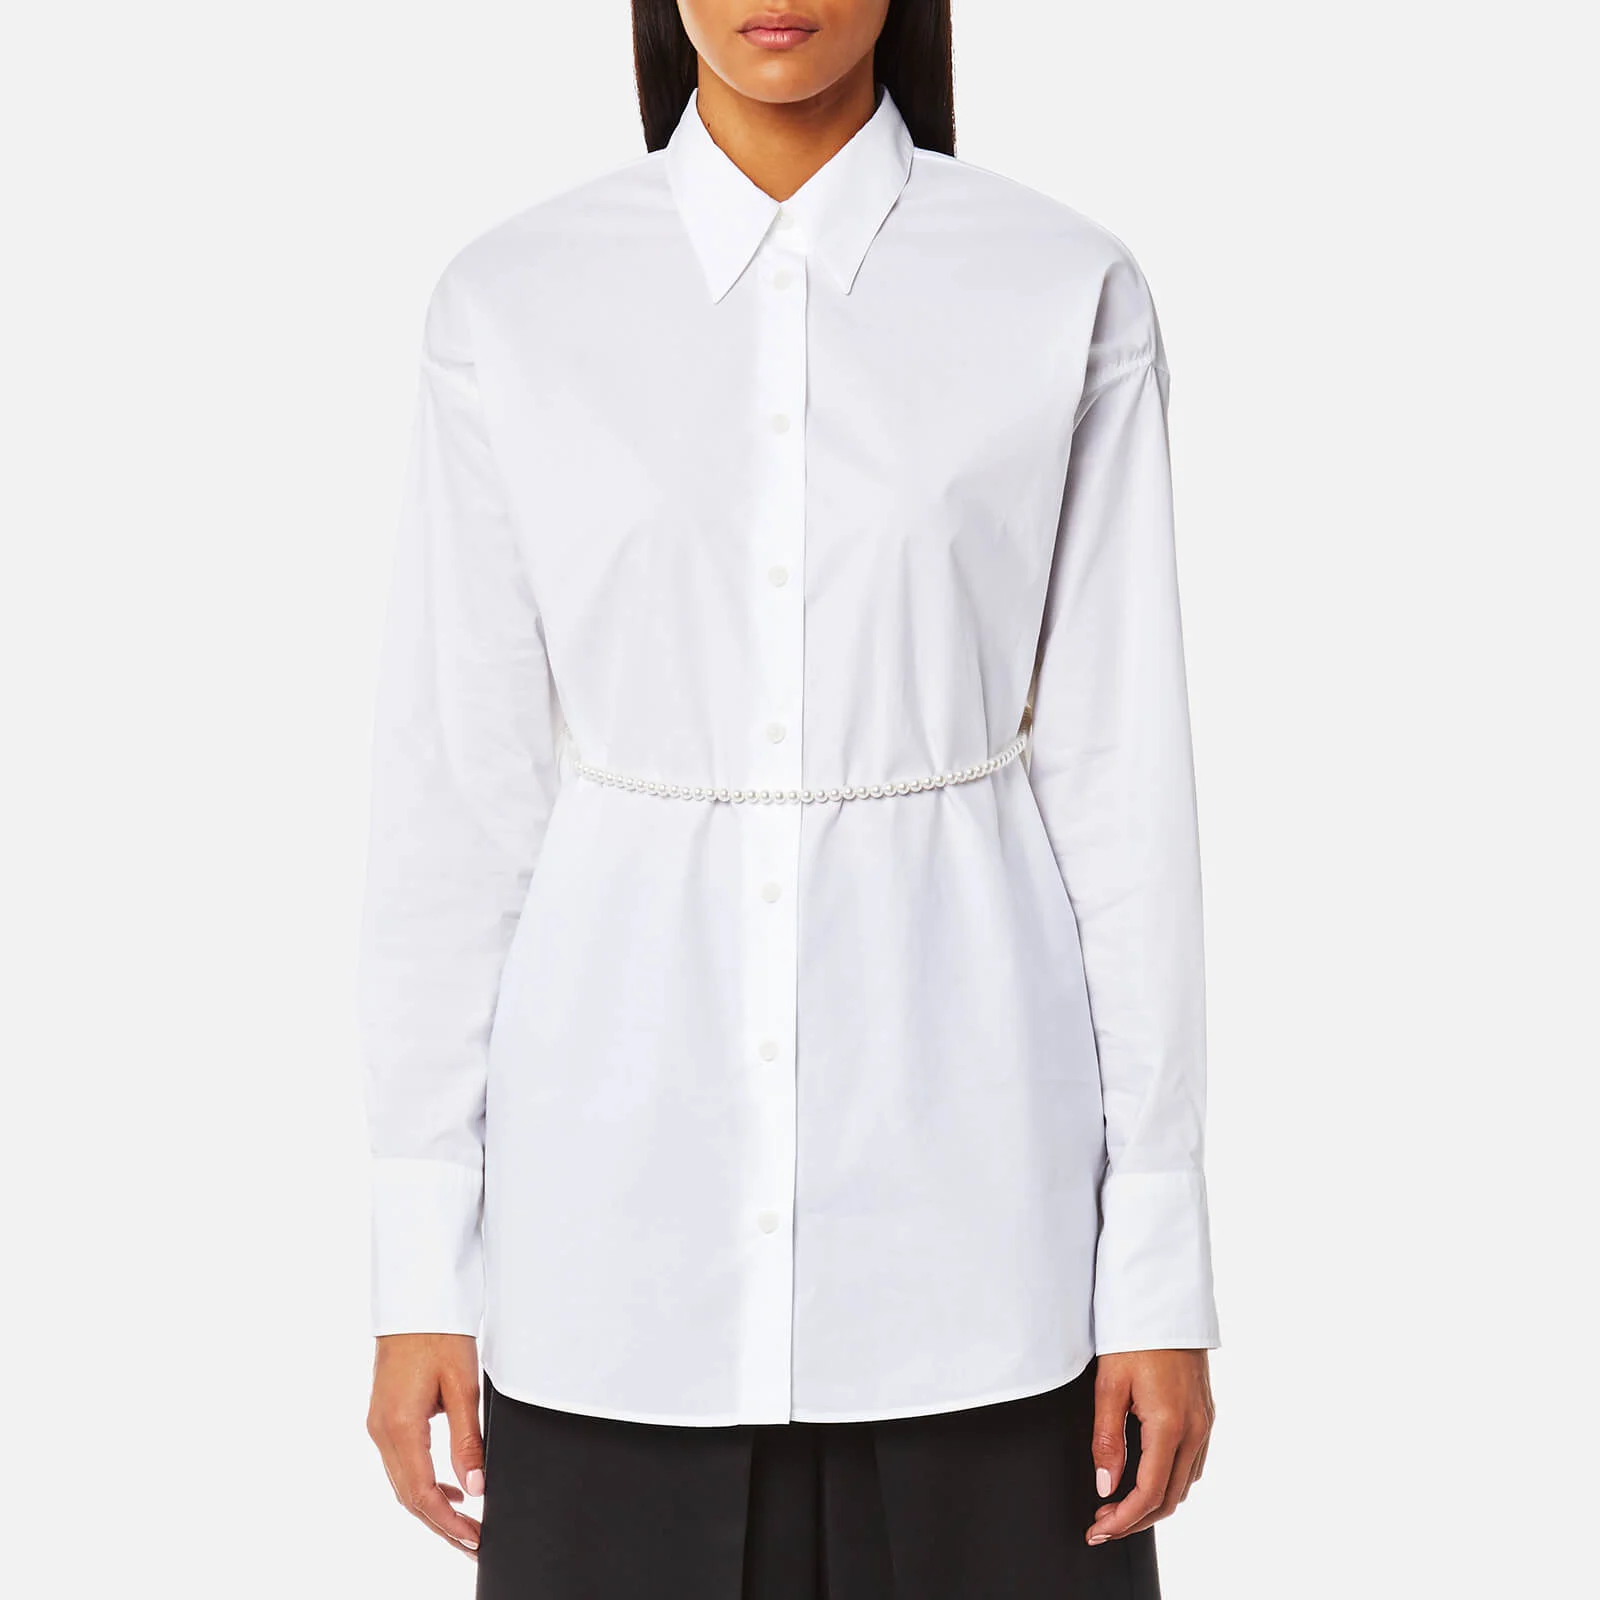 MM6 Maison Margiela Women's Parachute Poplin Shirt with Tie Pearls - White Image 1